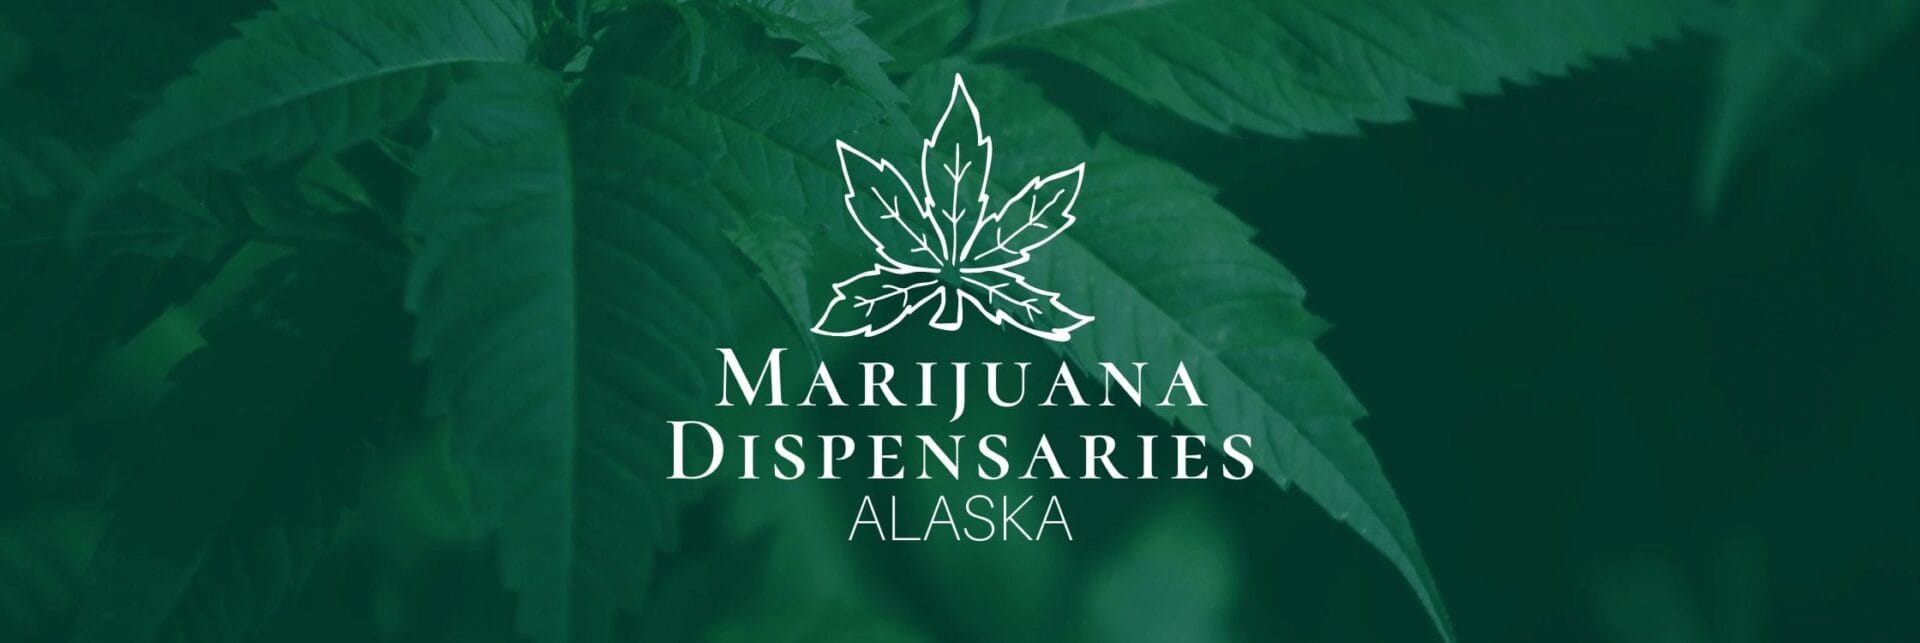 Marijuana Dispensaries in Alaska